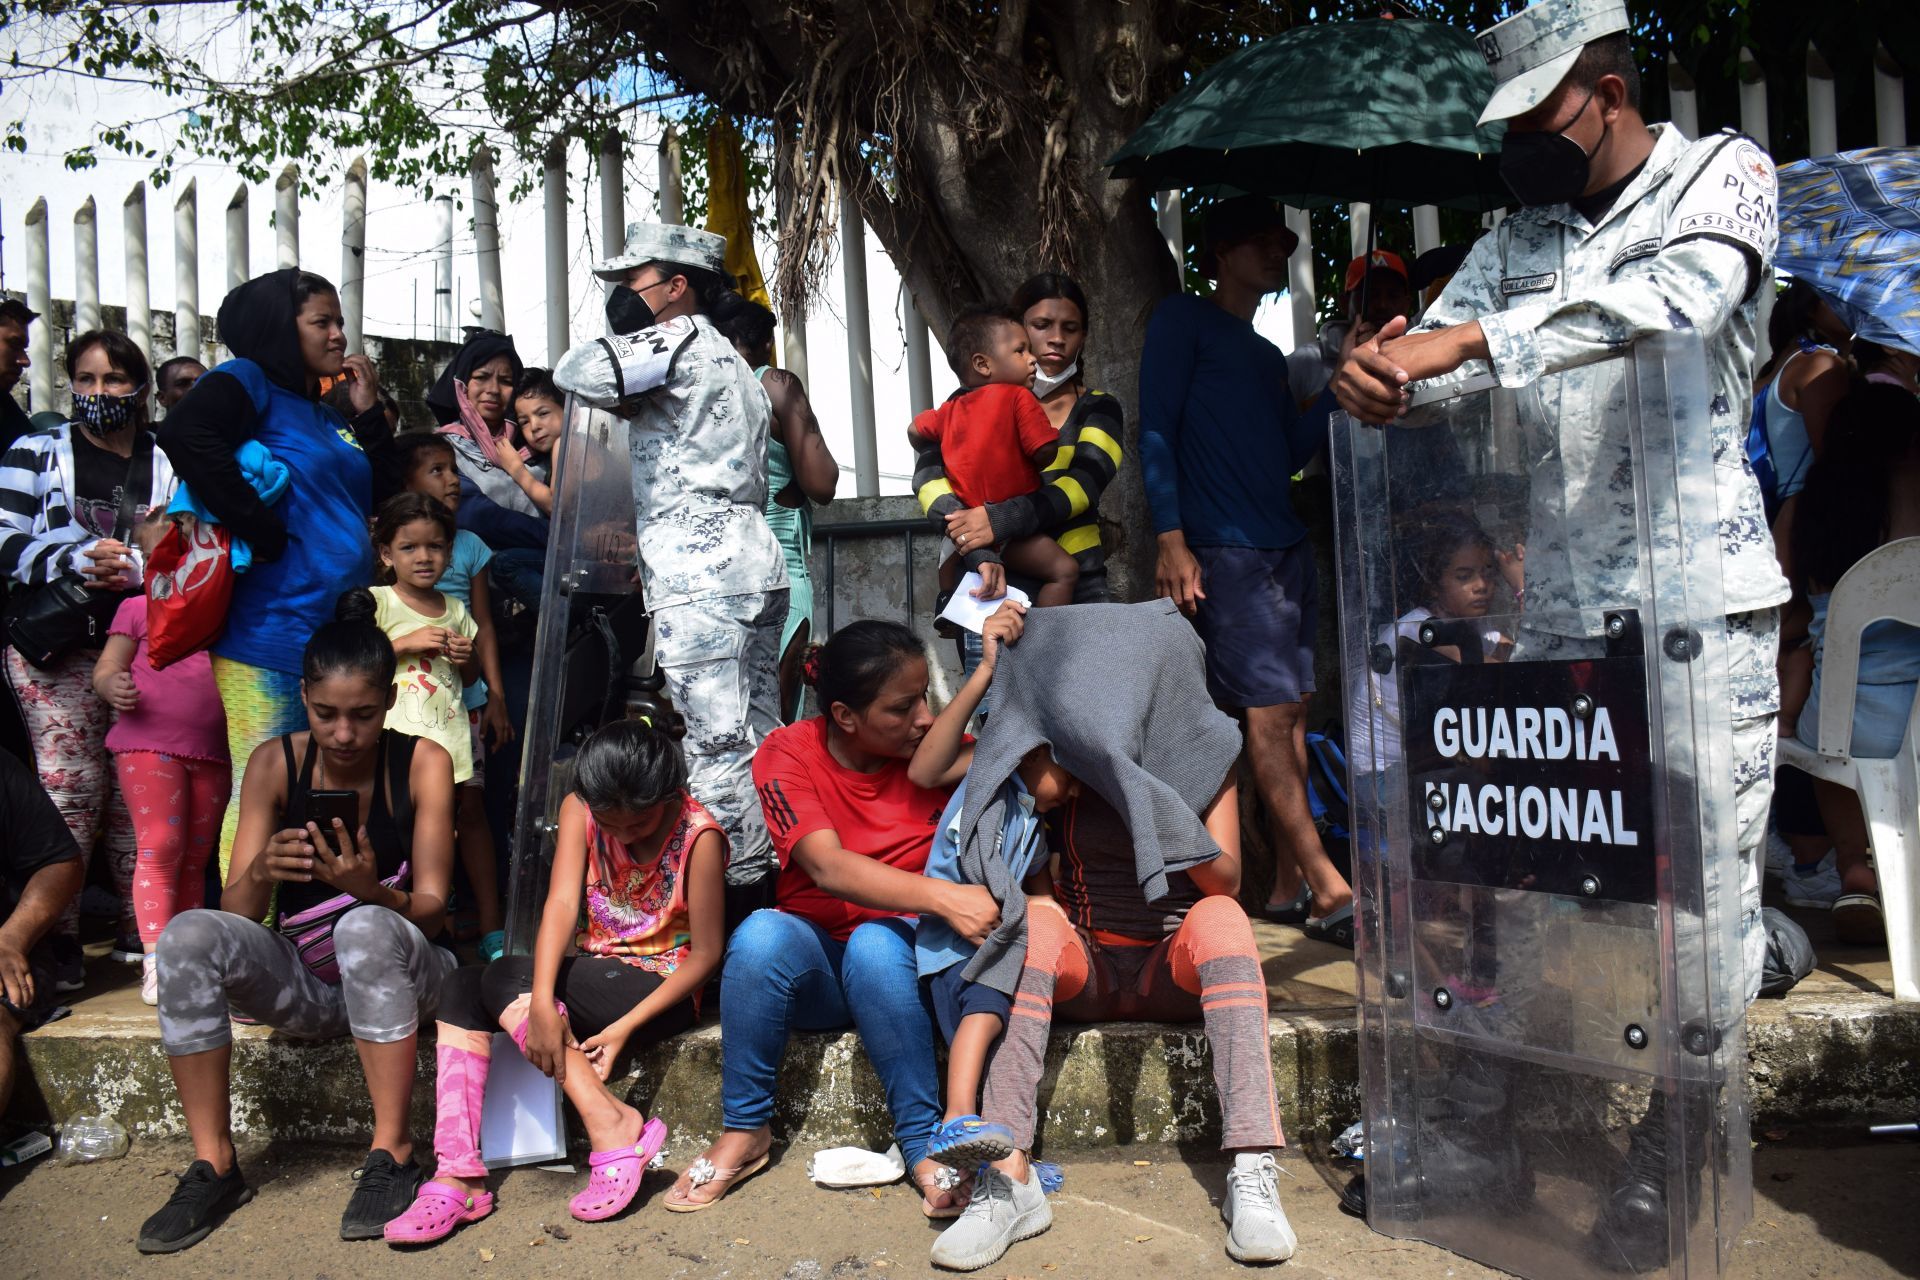 98 migrants located in an abandoned trailer in Veracruz